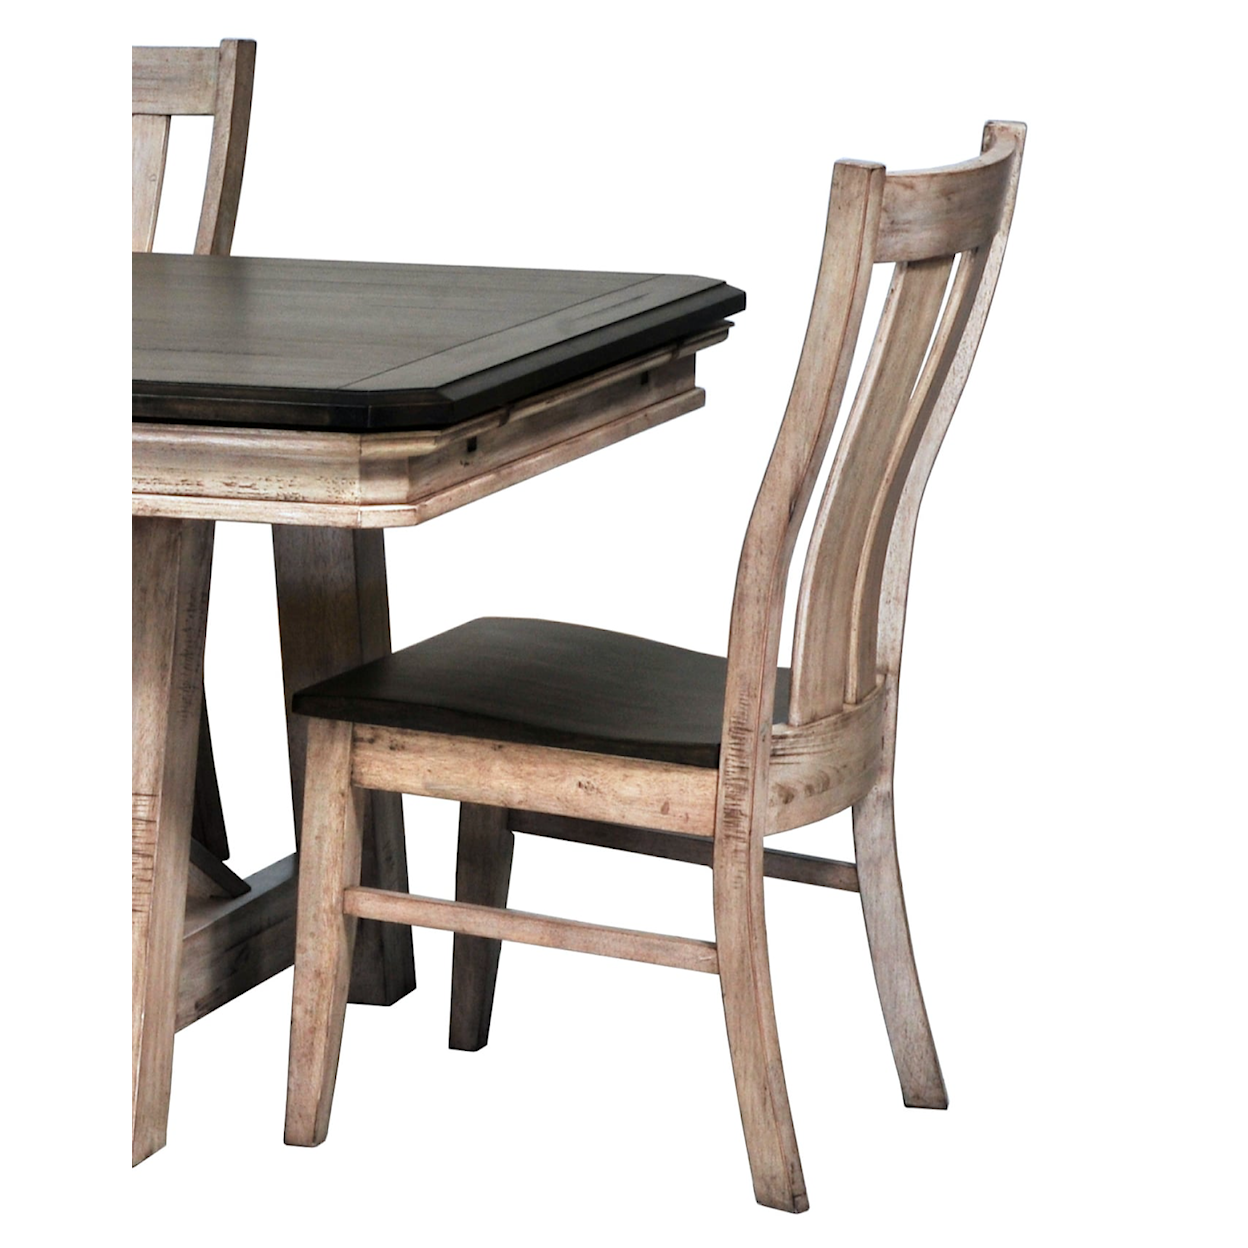 Napa Furniture Design Carmel Side Dining Chair